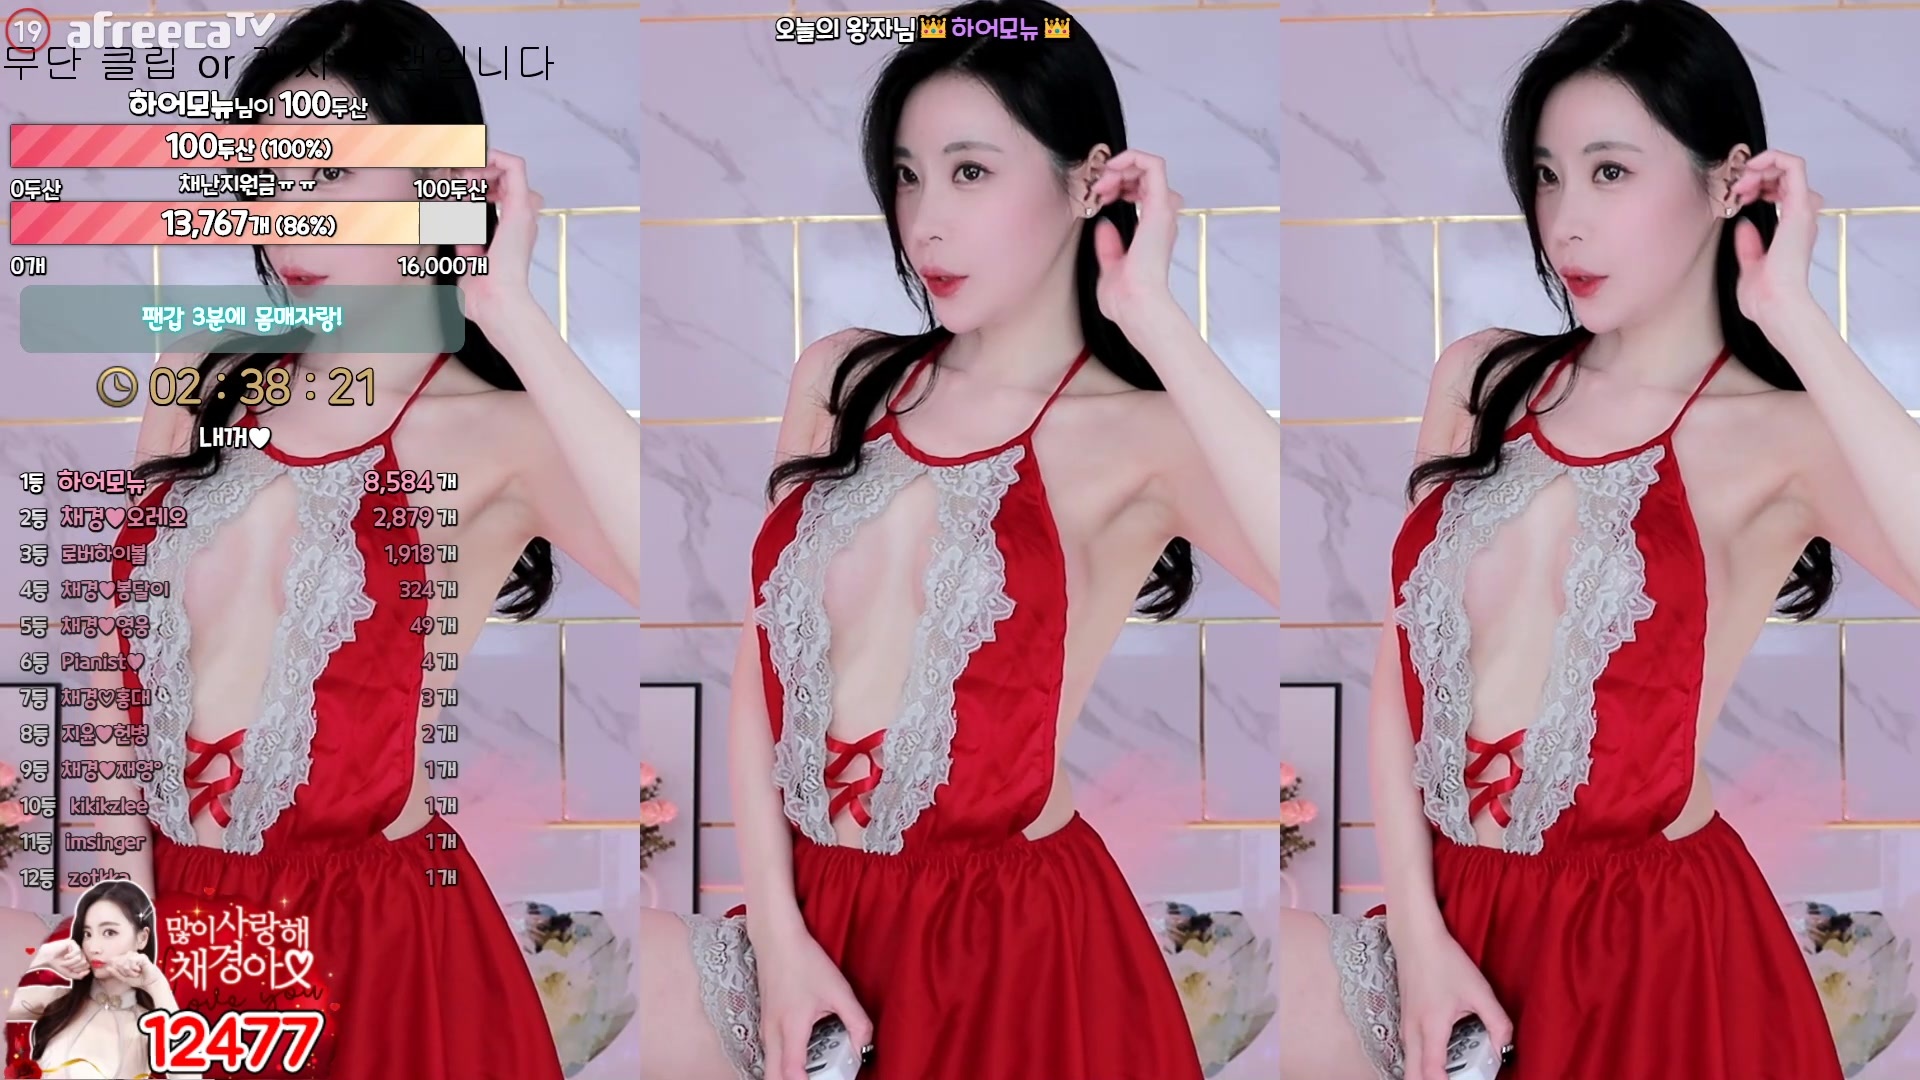 AfreecaTV Royal Sister Department Dancer @Caijing Temptation Hot Dance Collection (11)